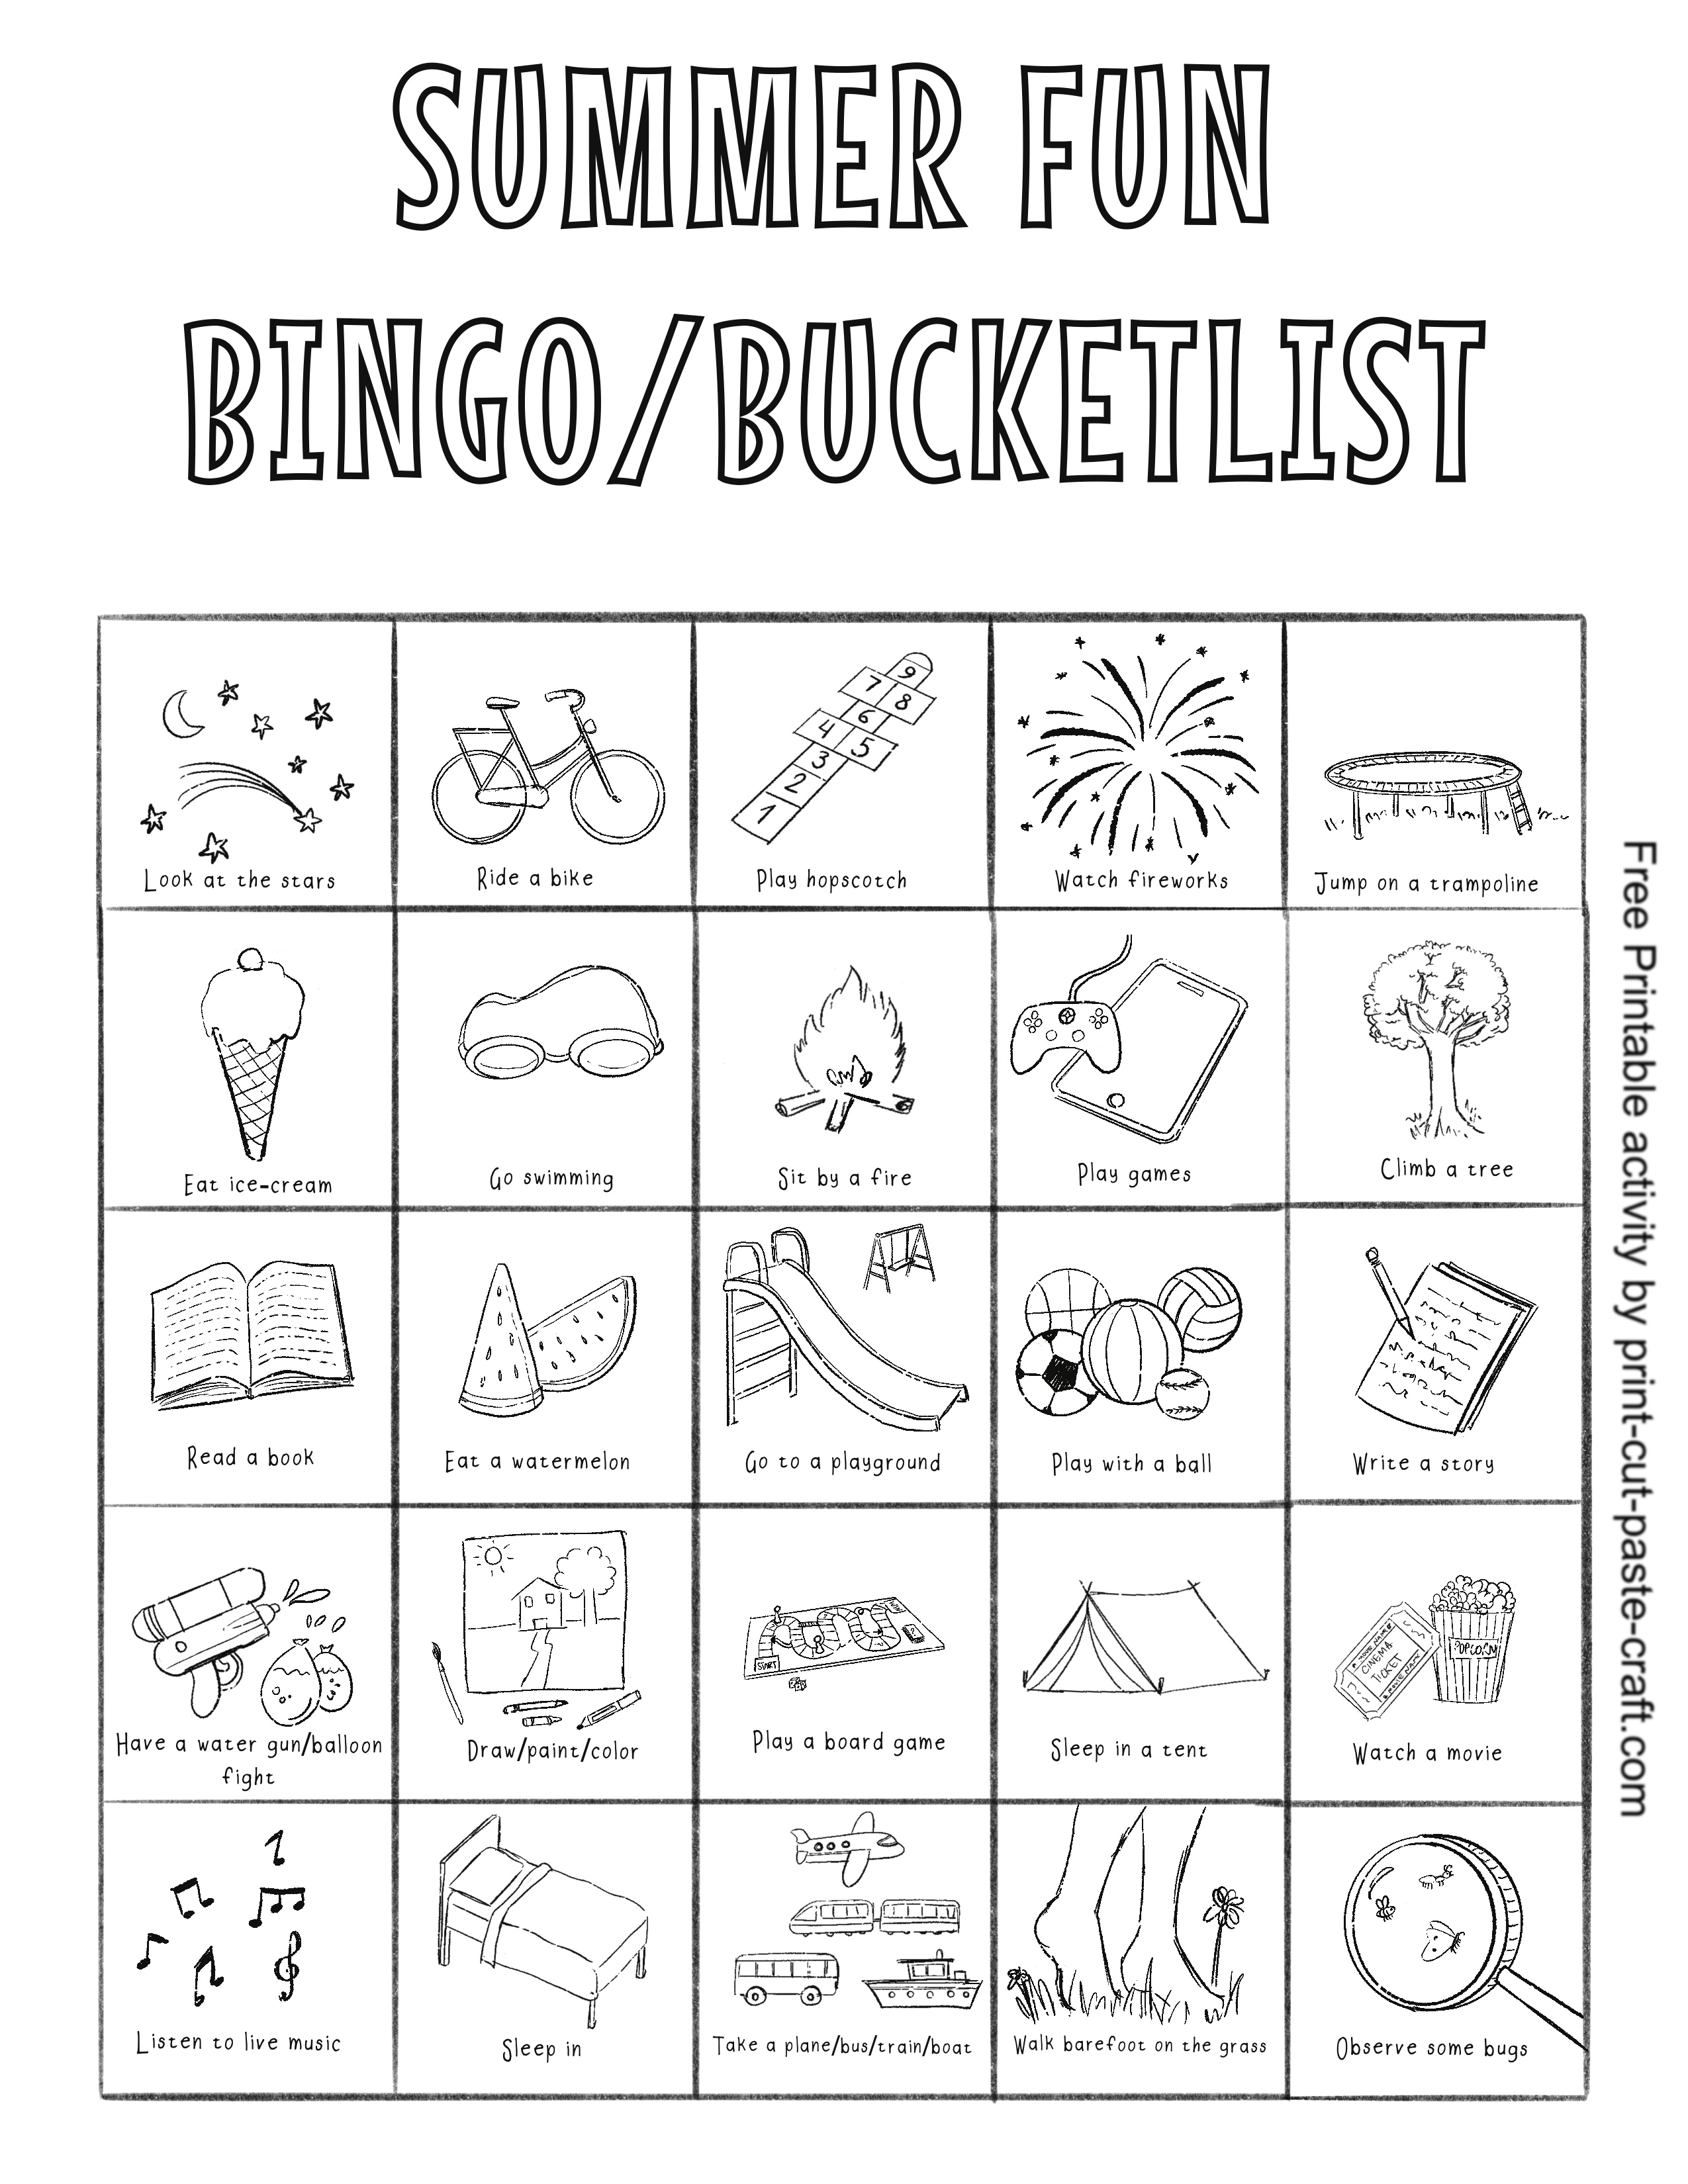 Summer bingo/bucket list free printable activity by print-cut-paste-craft.com bw